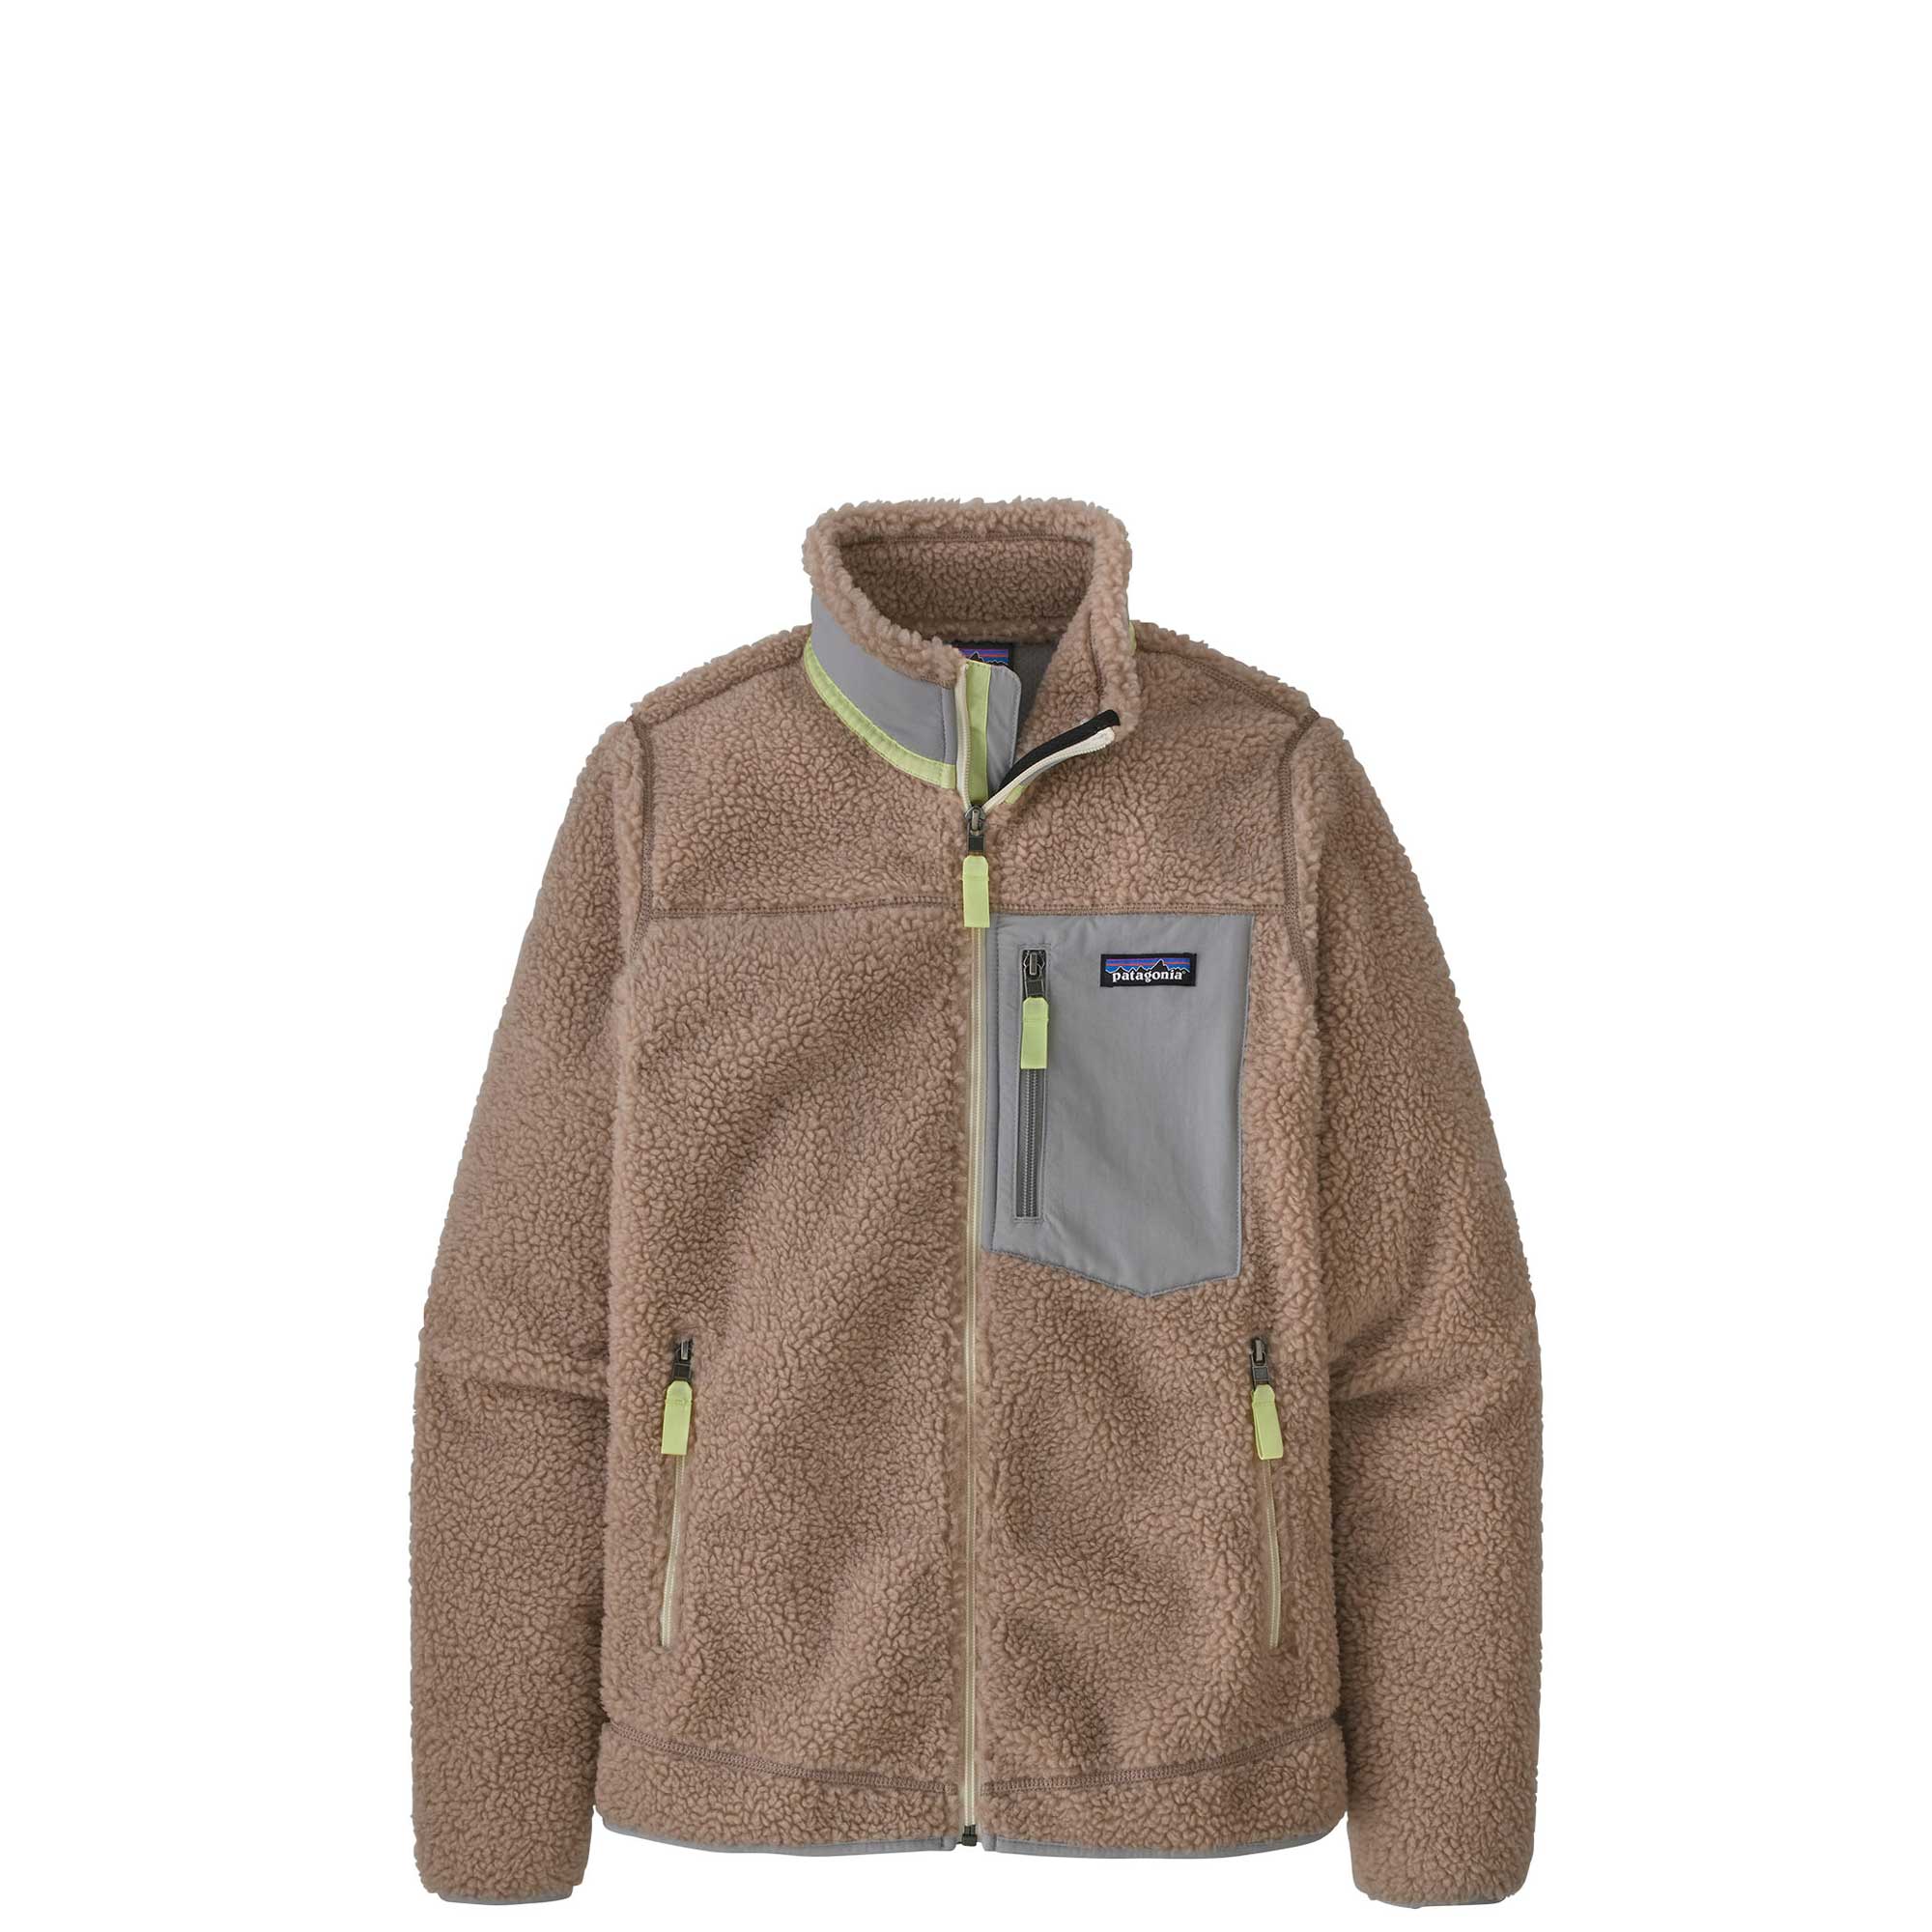 Women's Patagonia Insulated Heywood Jacket Size Large $199